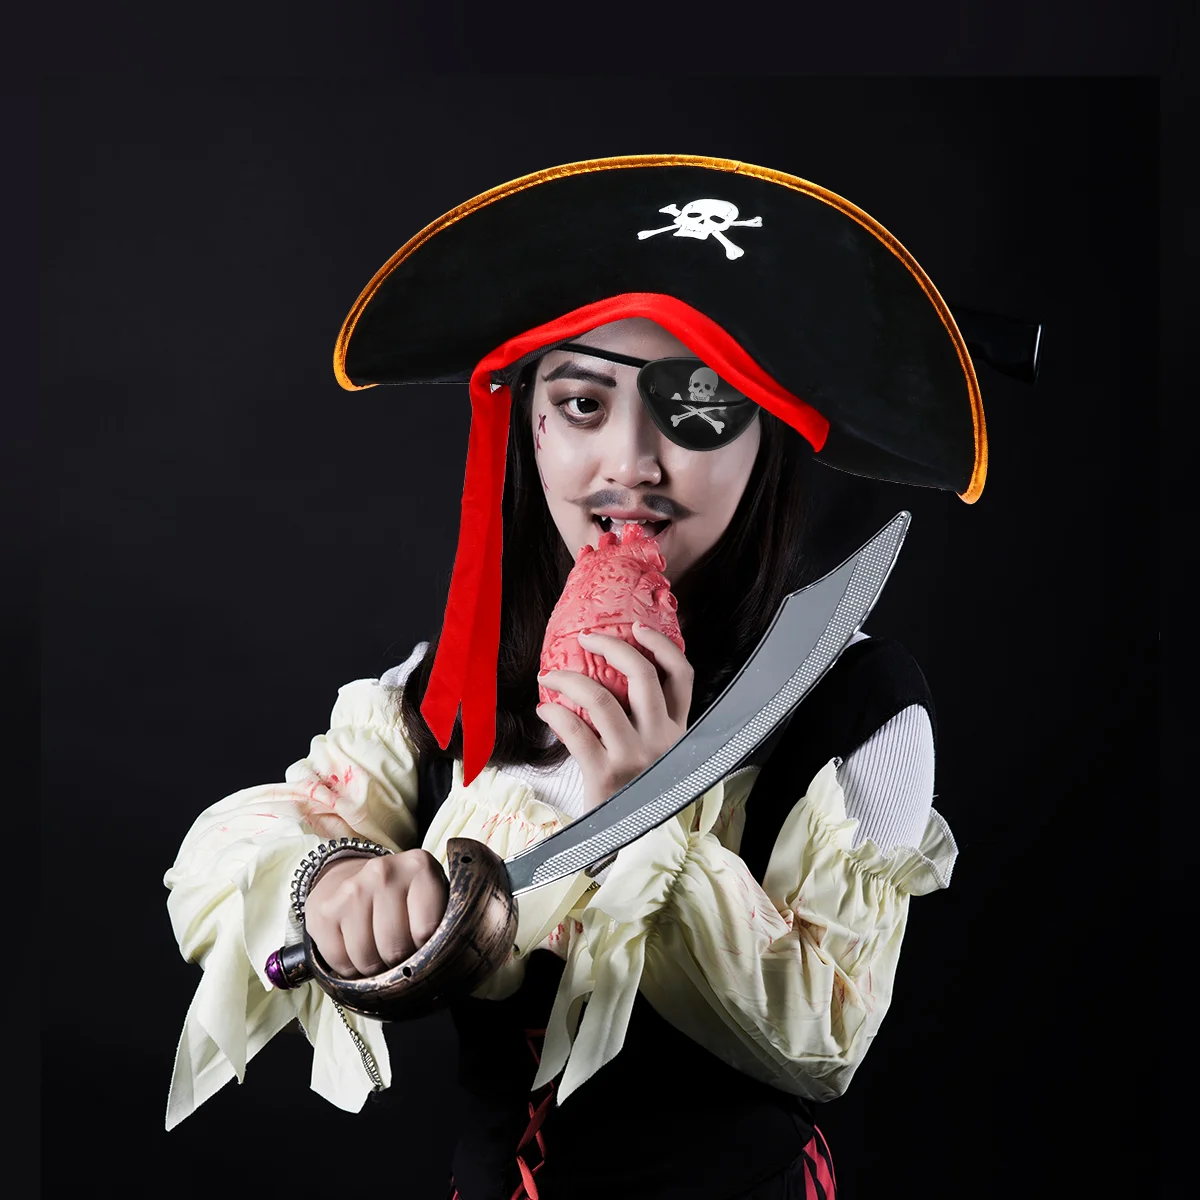 Tanie Pirate Eye kostium kapitan